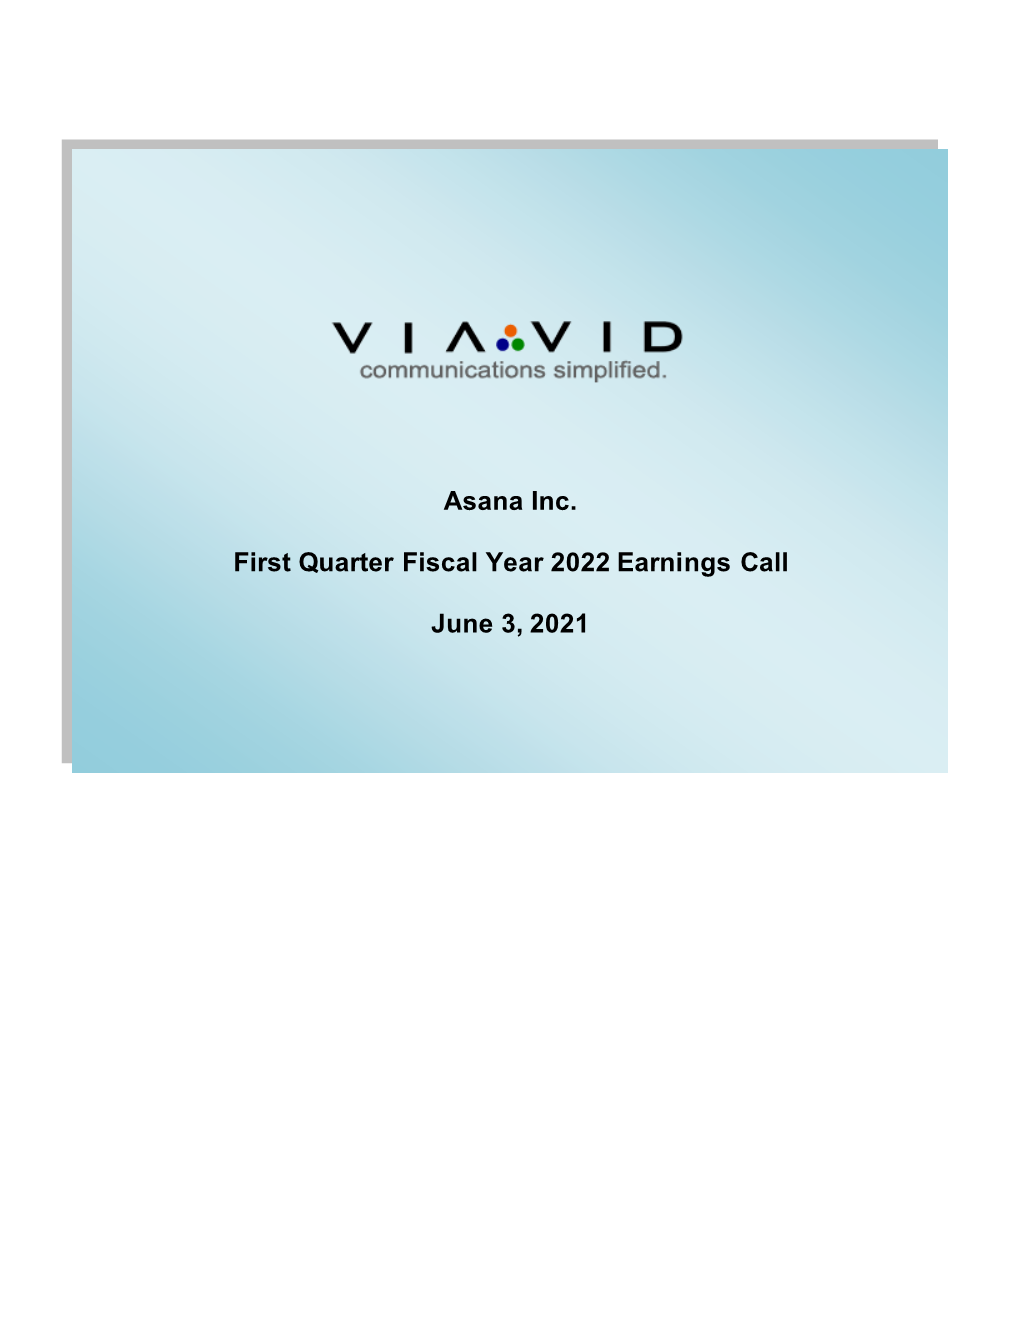 Asana Inc. First Quarter Fiscal Year 2022 Earnings Call June 3, 2021